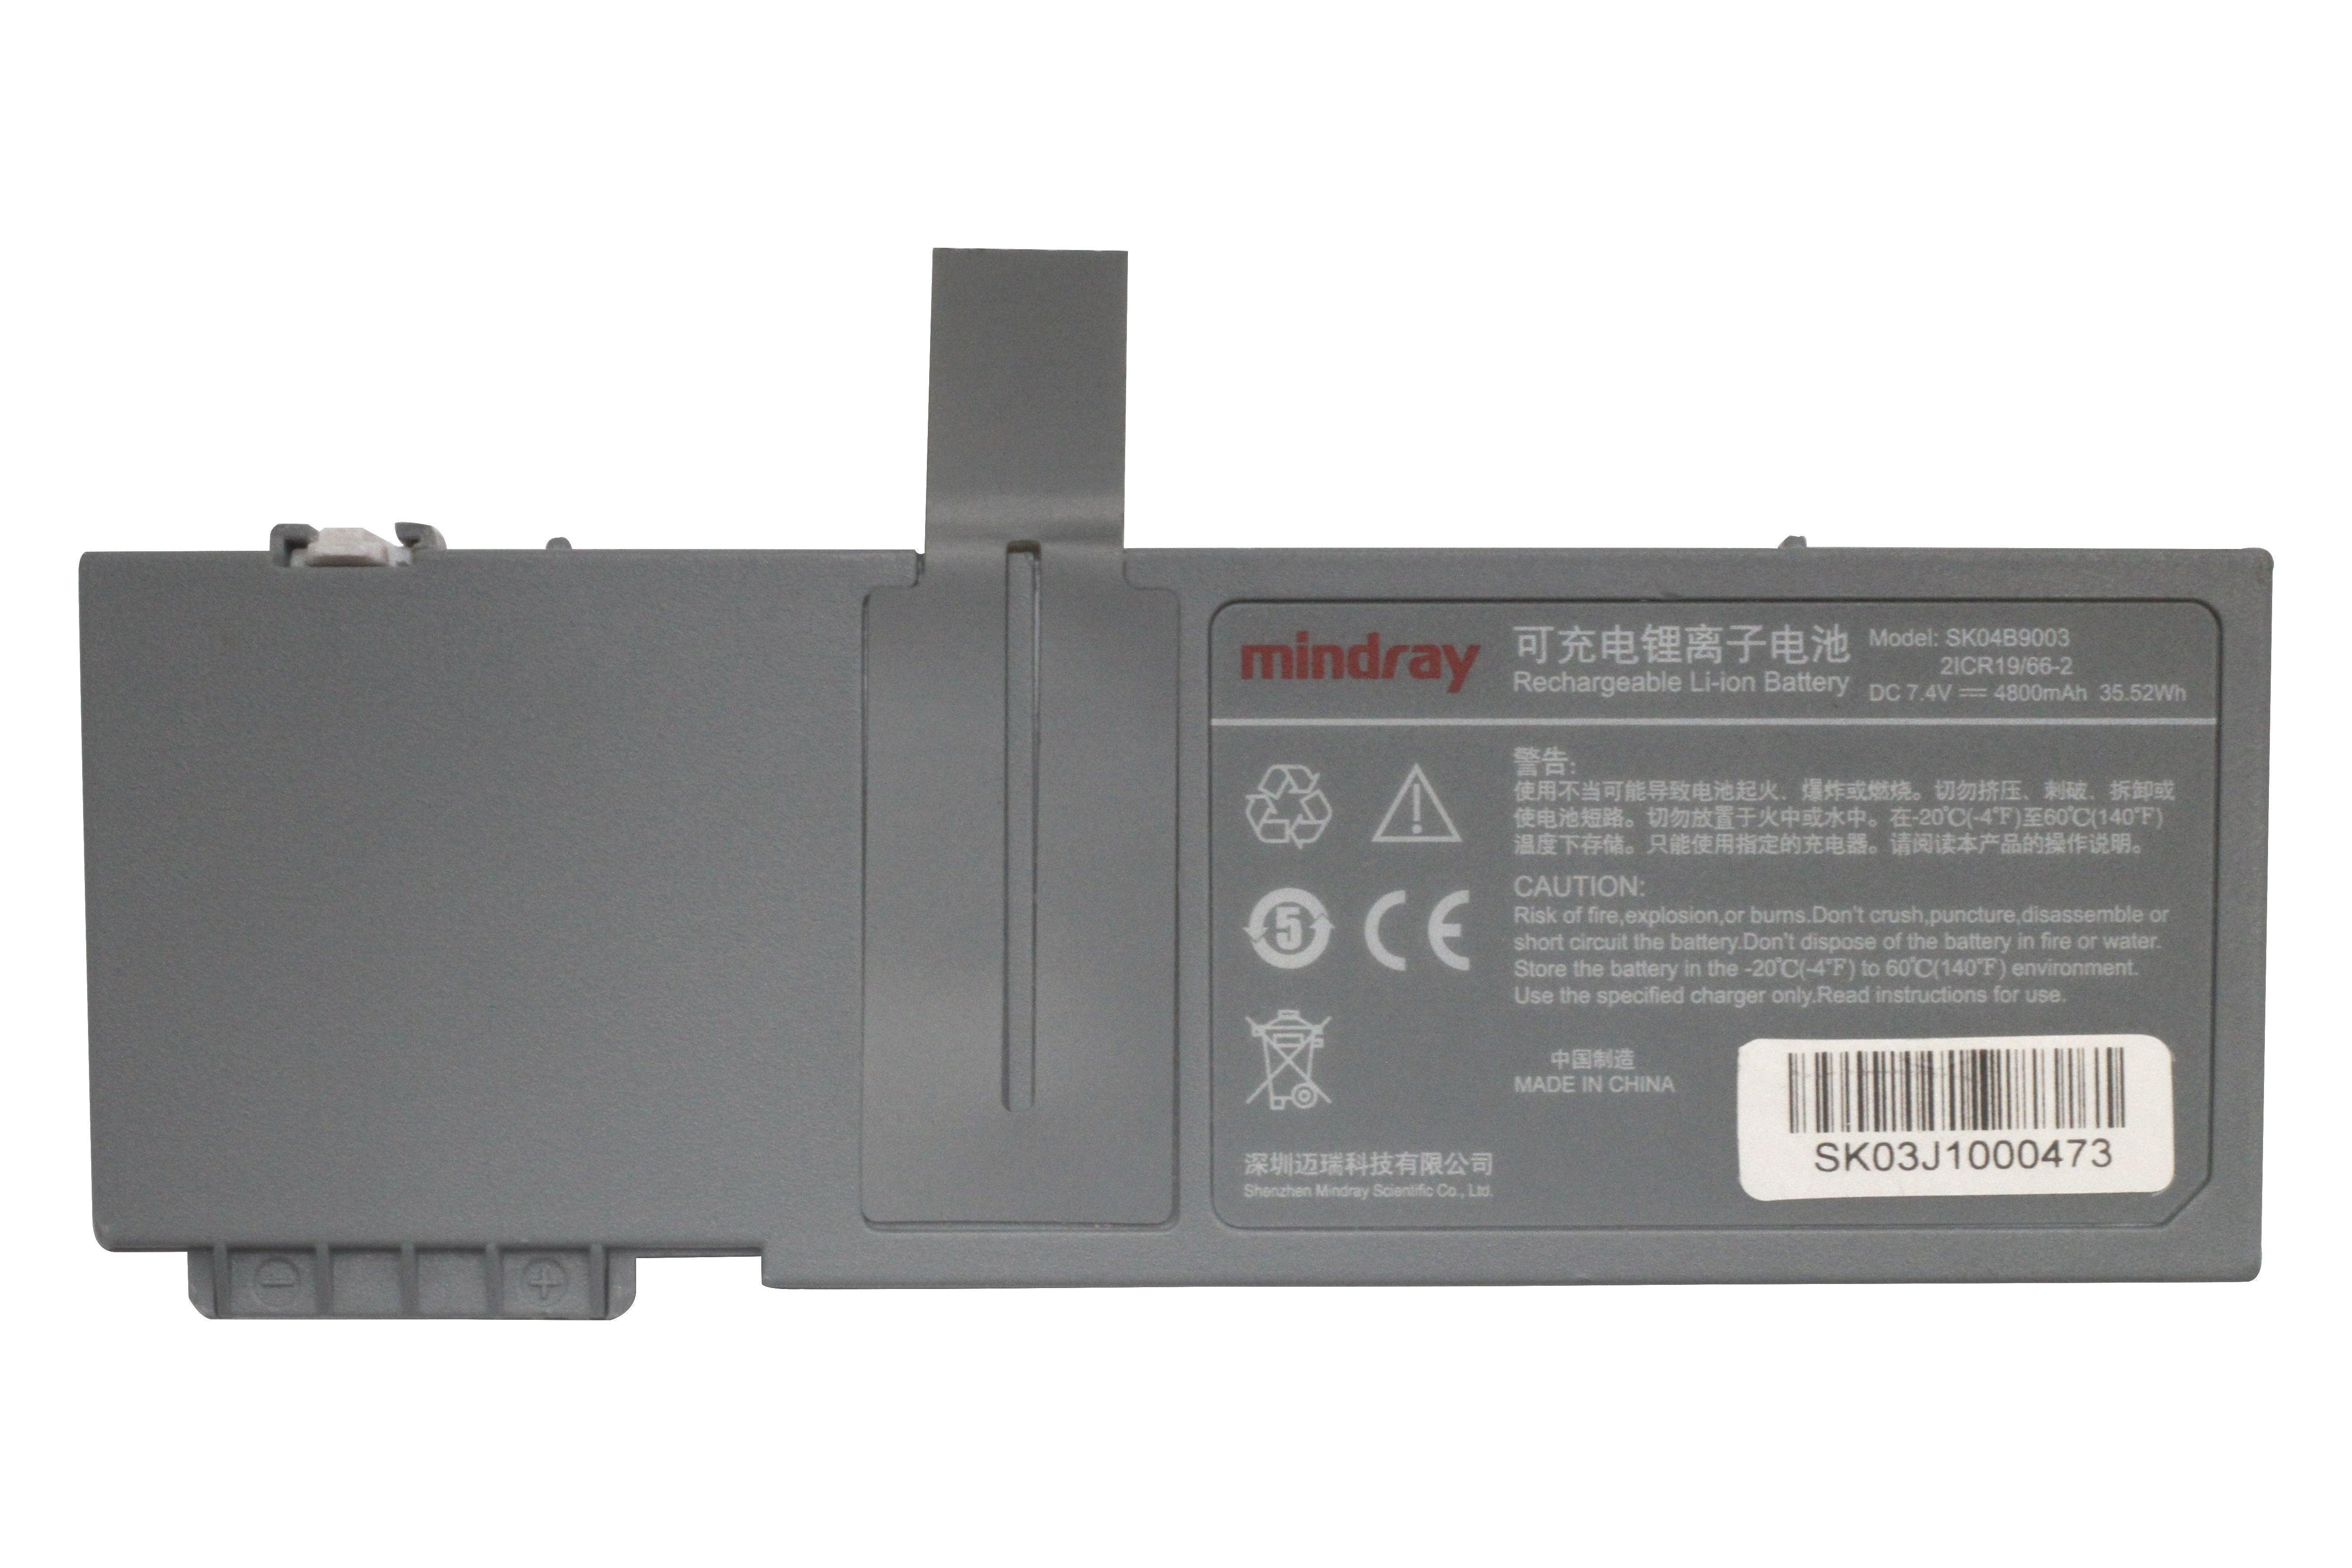 Mindray SK04B9003 For BeneFusion SP5 VP5 Infusion Pump battery 7.4V 4800mAh Li-Ion Battery 2ICR19/66-2 Infusion Pump Battery, Medical Battery, Mindray Battery, Rechargeable SK04B9003 Mindray